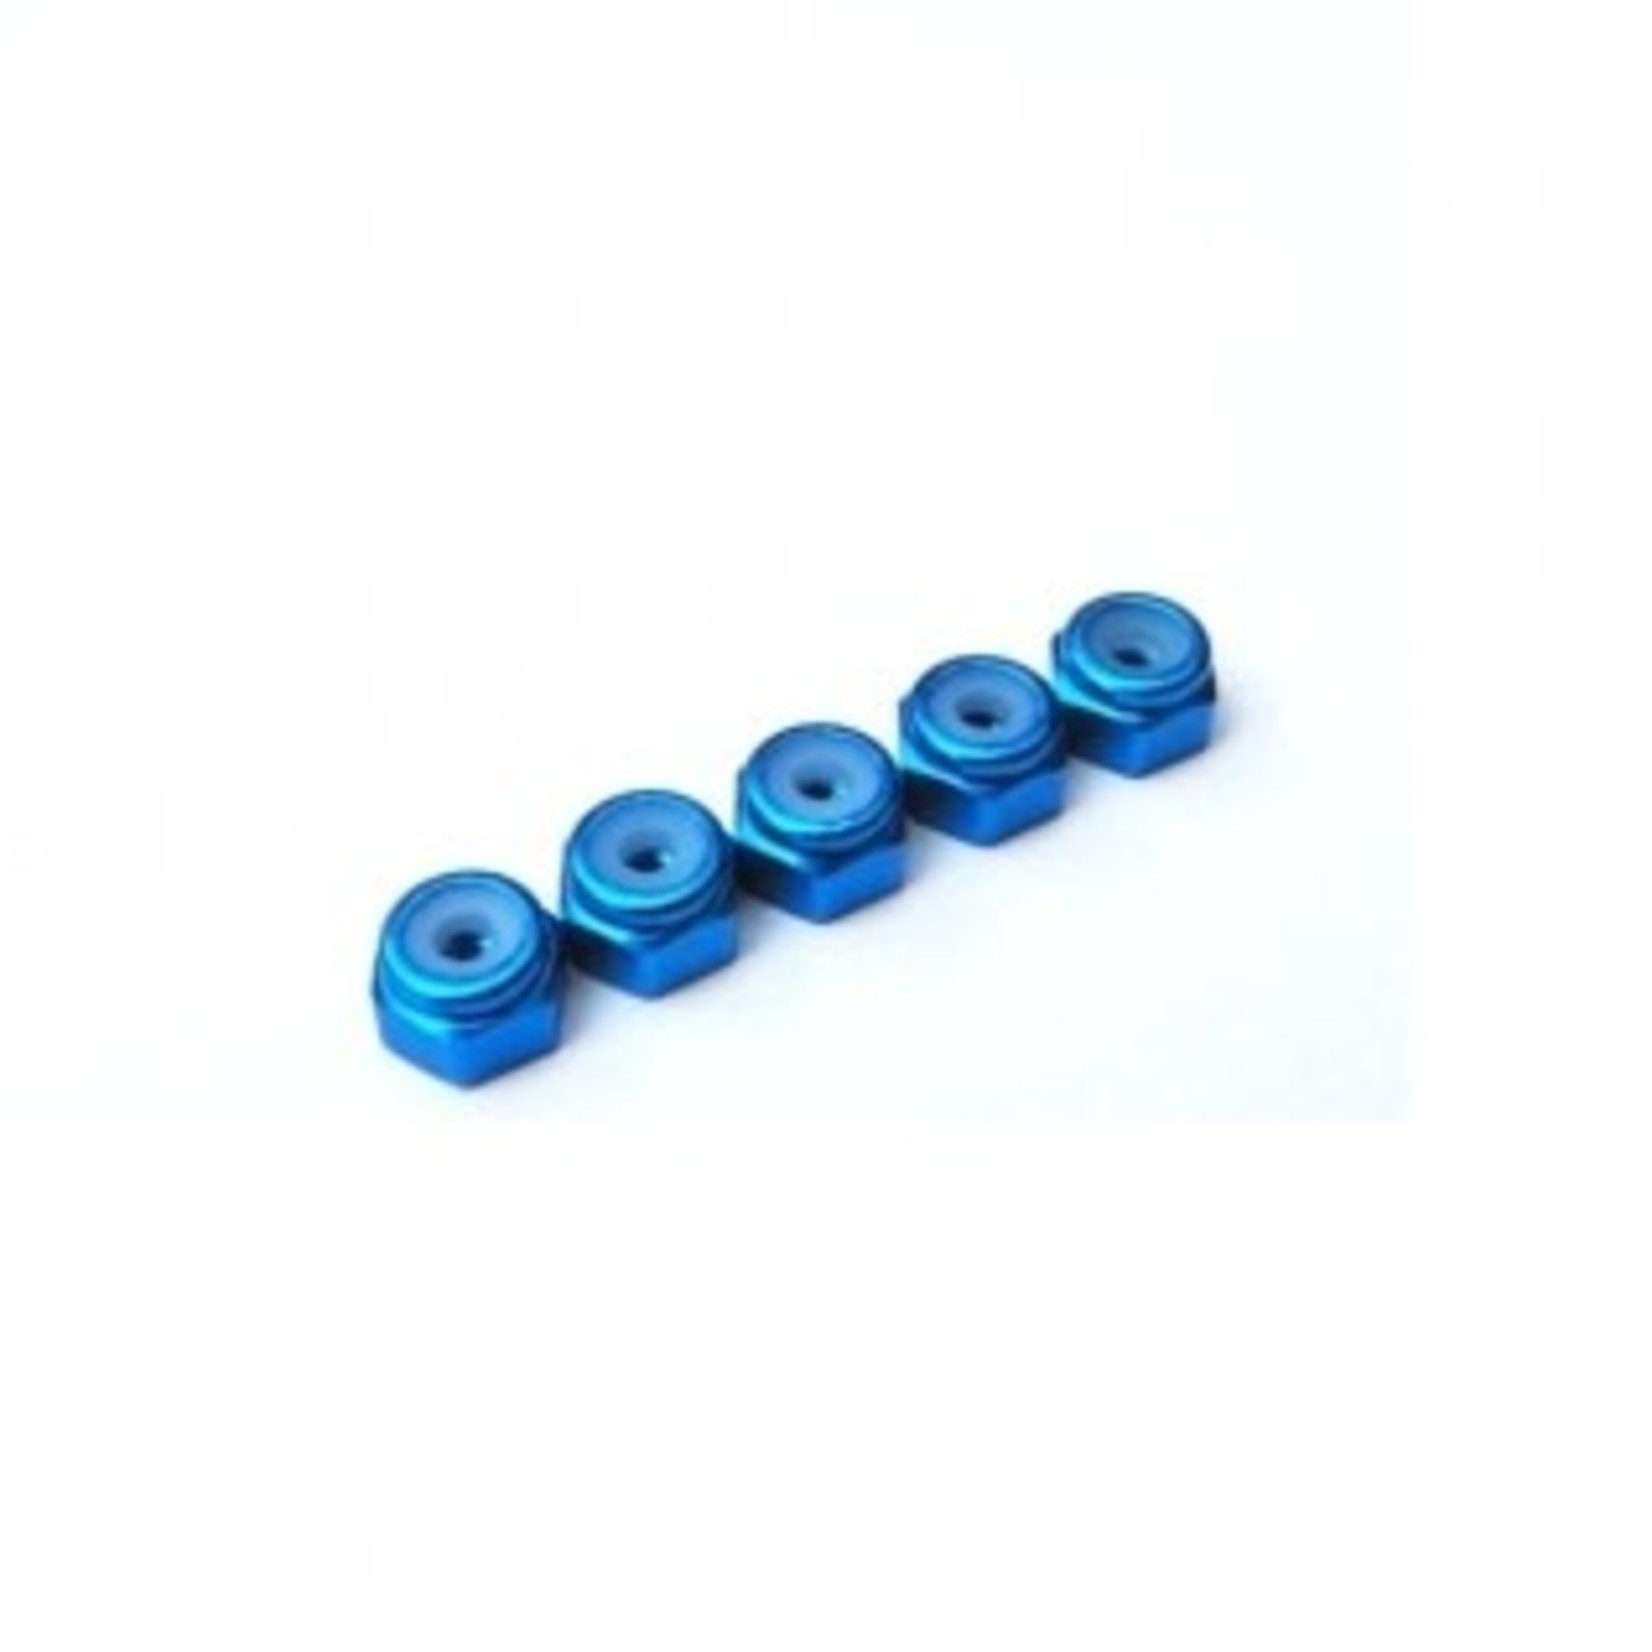 Hiro seiko HSI 2mm Alloy Nylon Nut Tamiya Blue (5pcs)